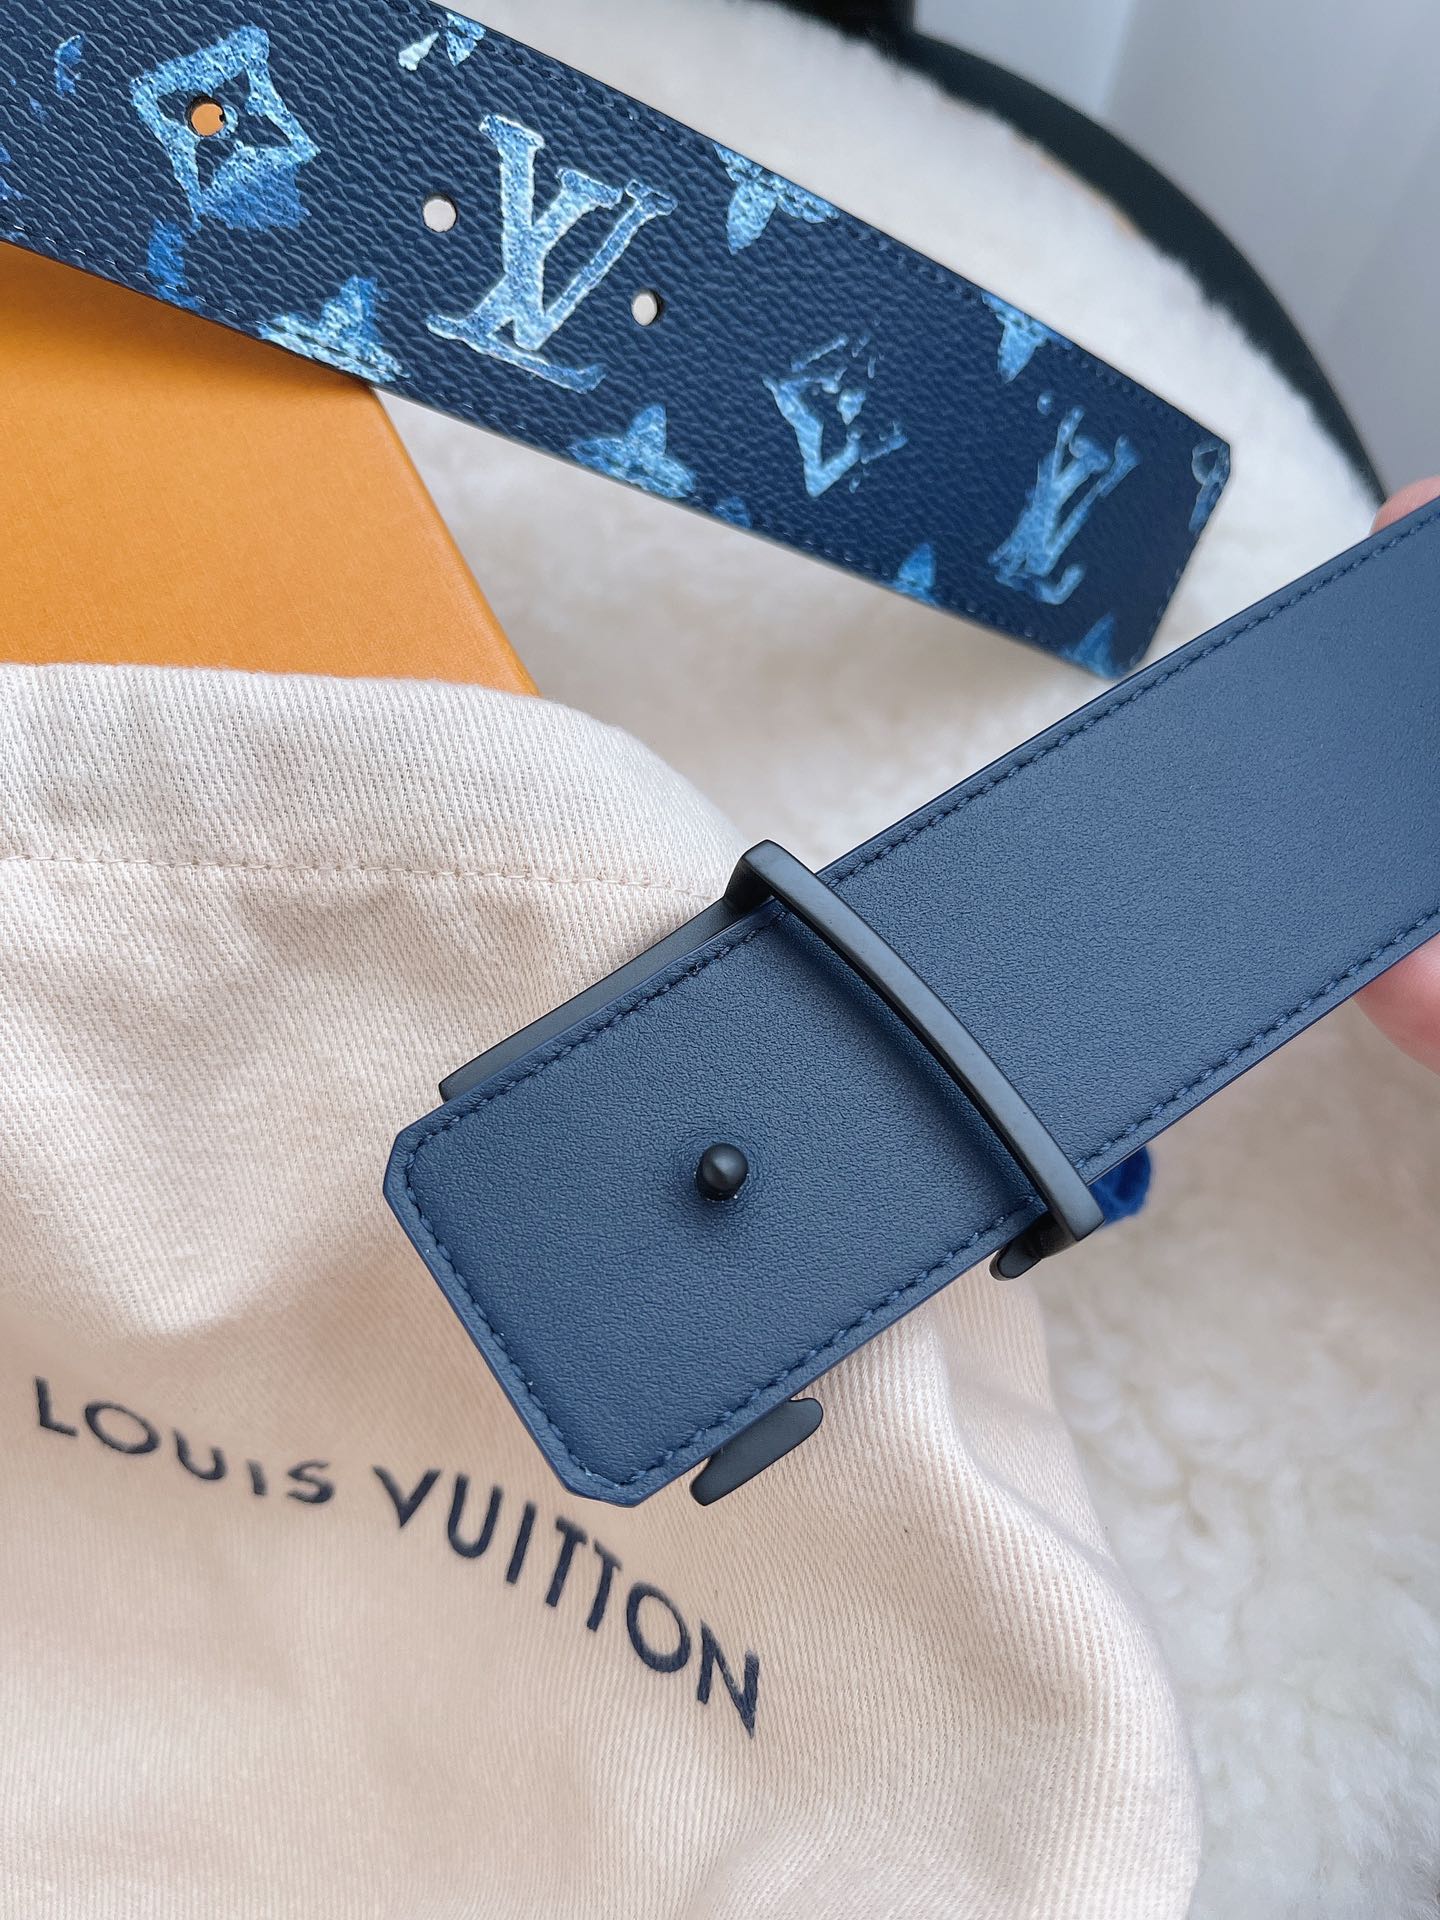 Louis Vuitton Belt in Blue